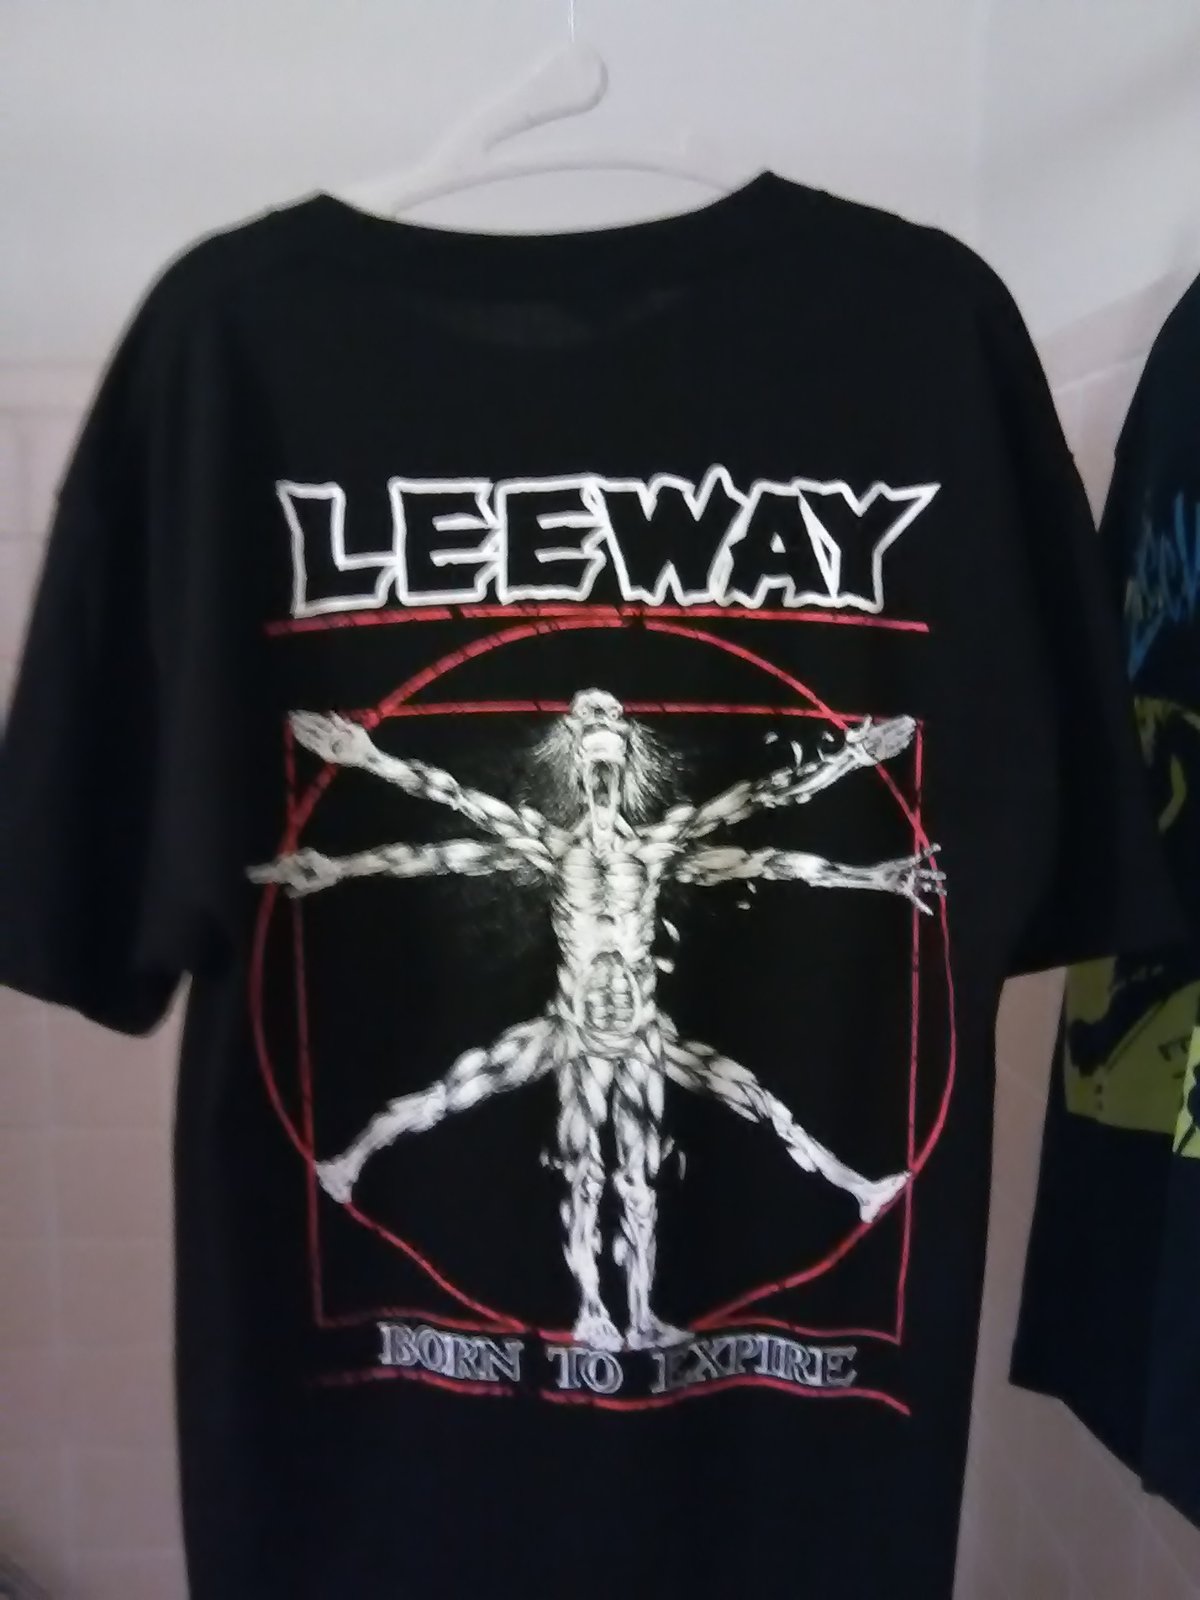 T-shirt　—　Eddie　Leeway's　Shop　Black　BORN　TO　EXPIRE　(double-sided)